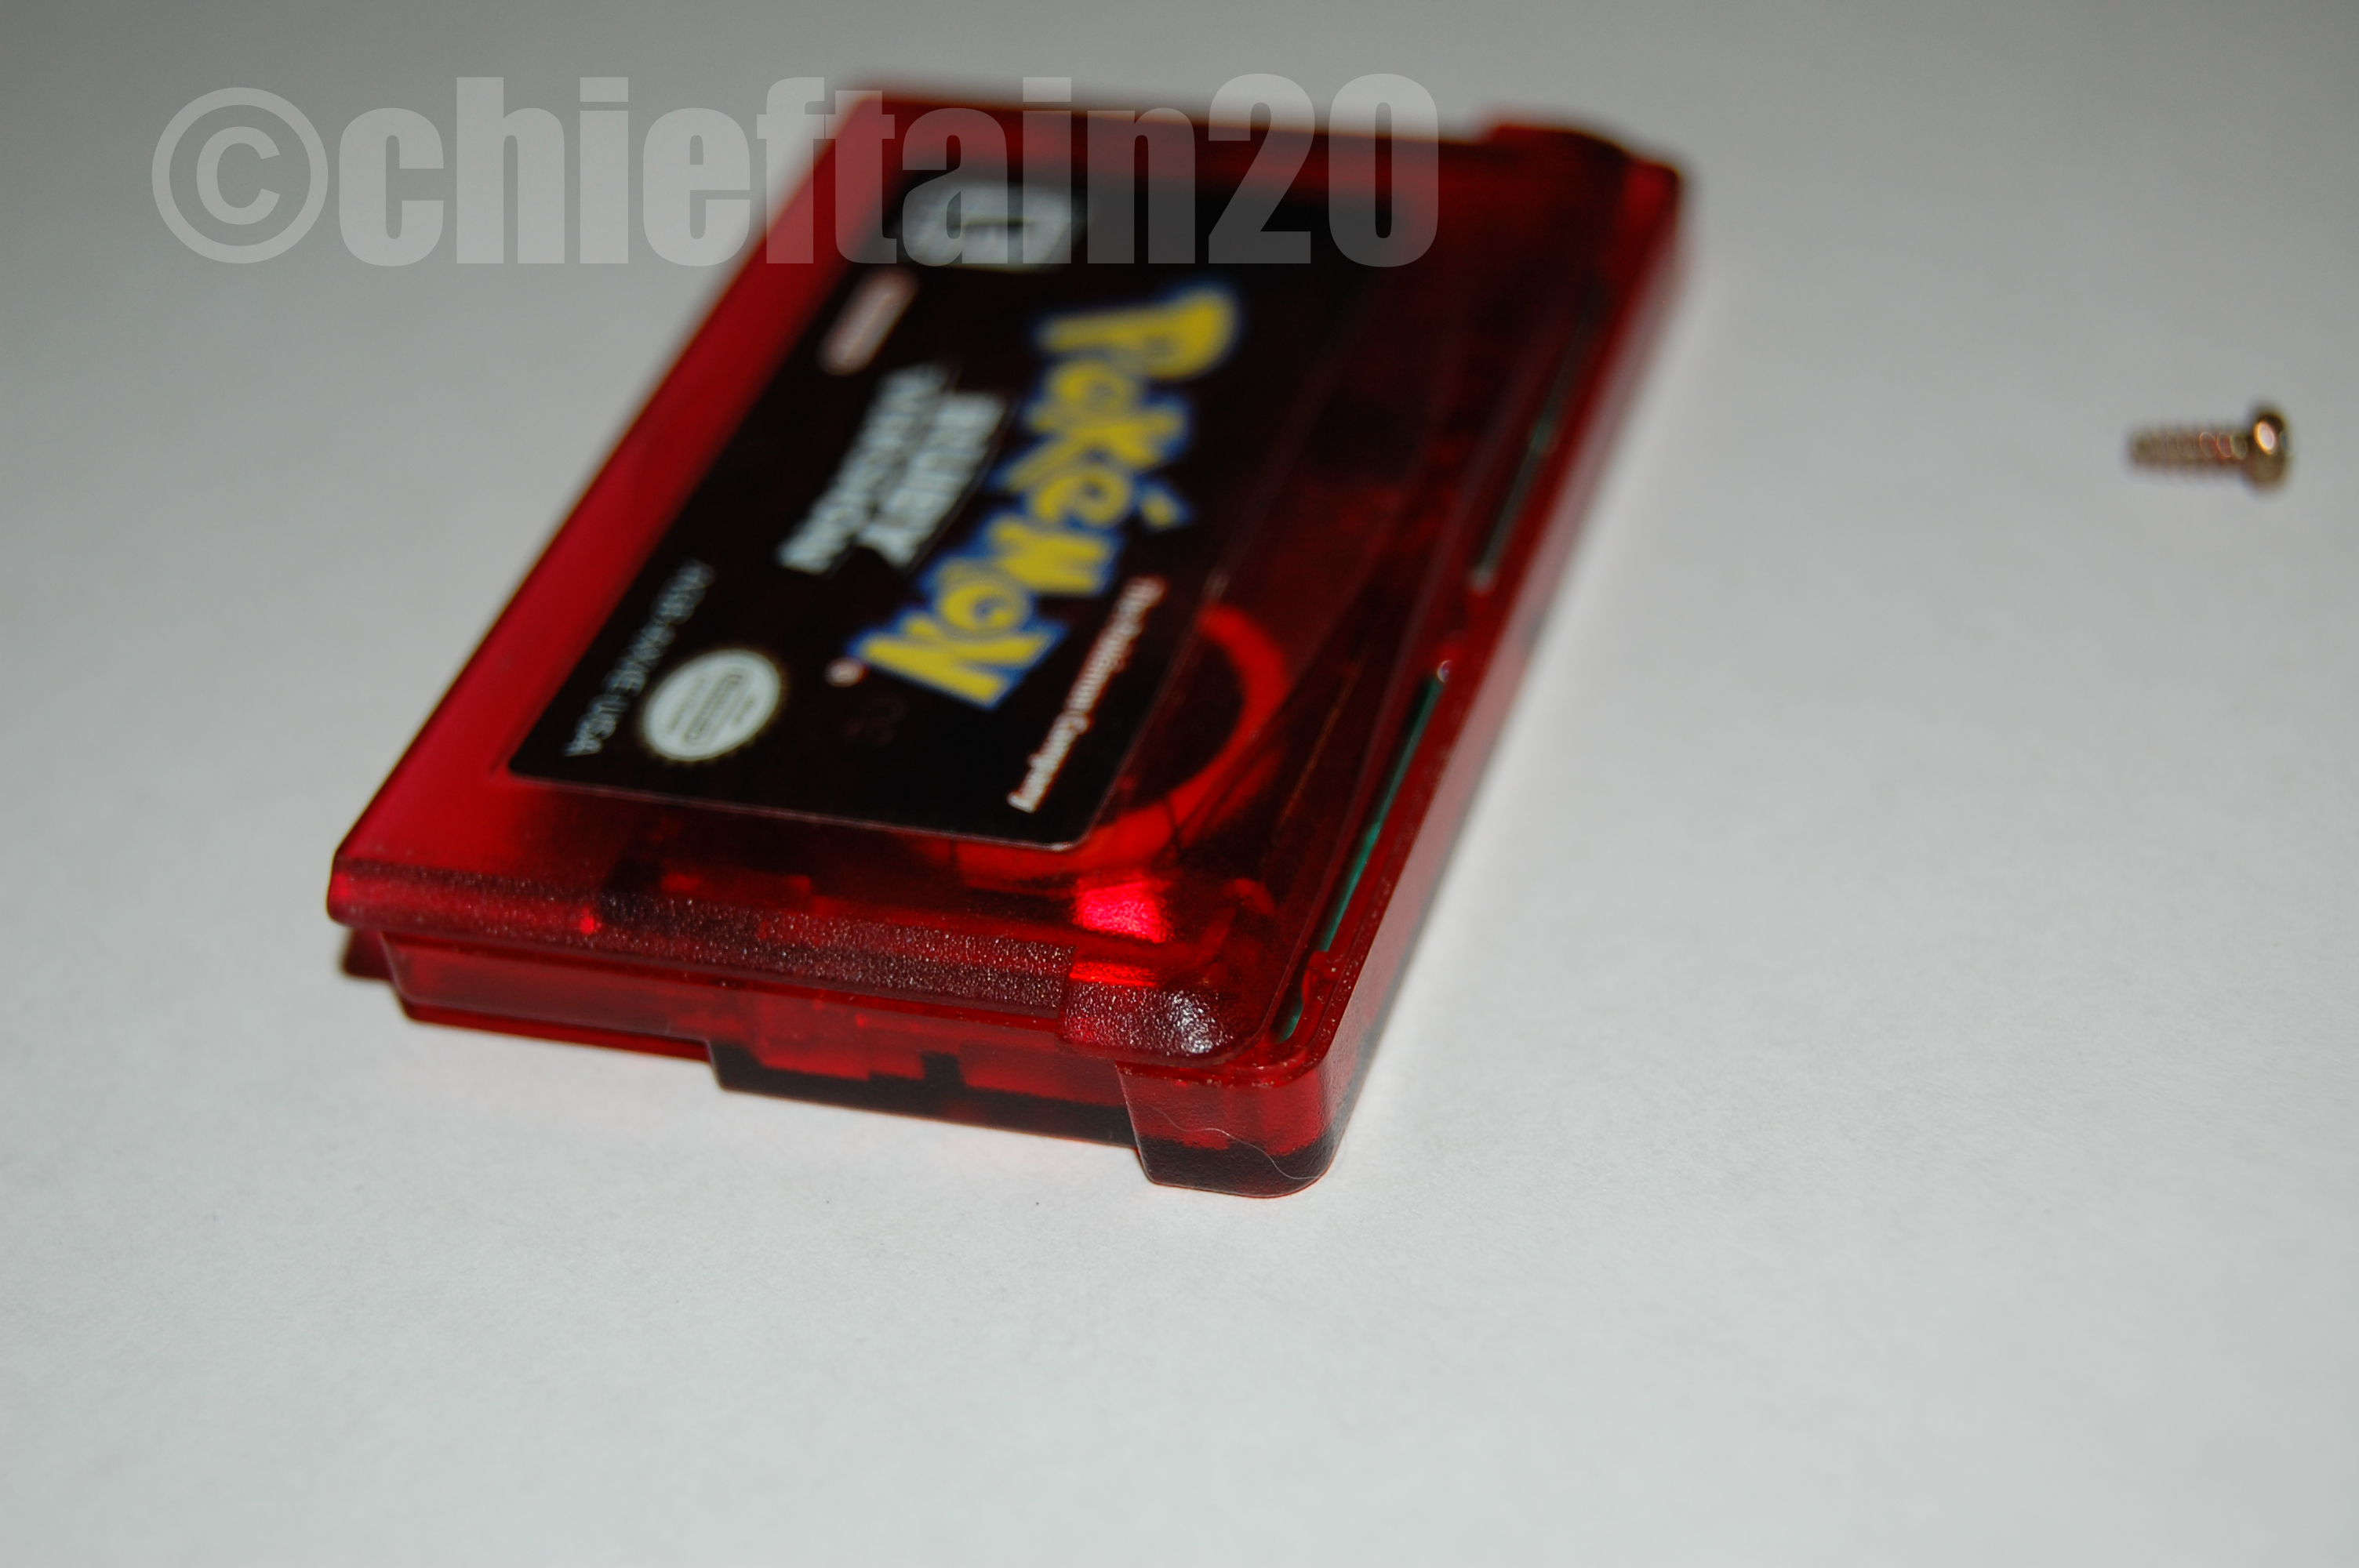 Pokemon Firered(GBA) + Pokemon black 2 (DS) check : r/gameverifying